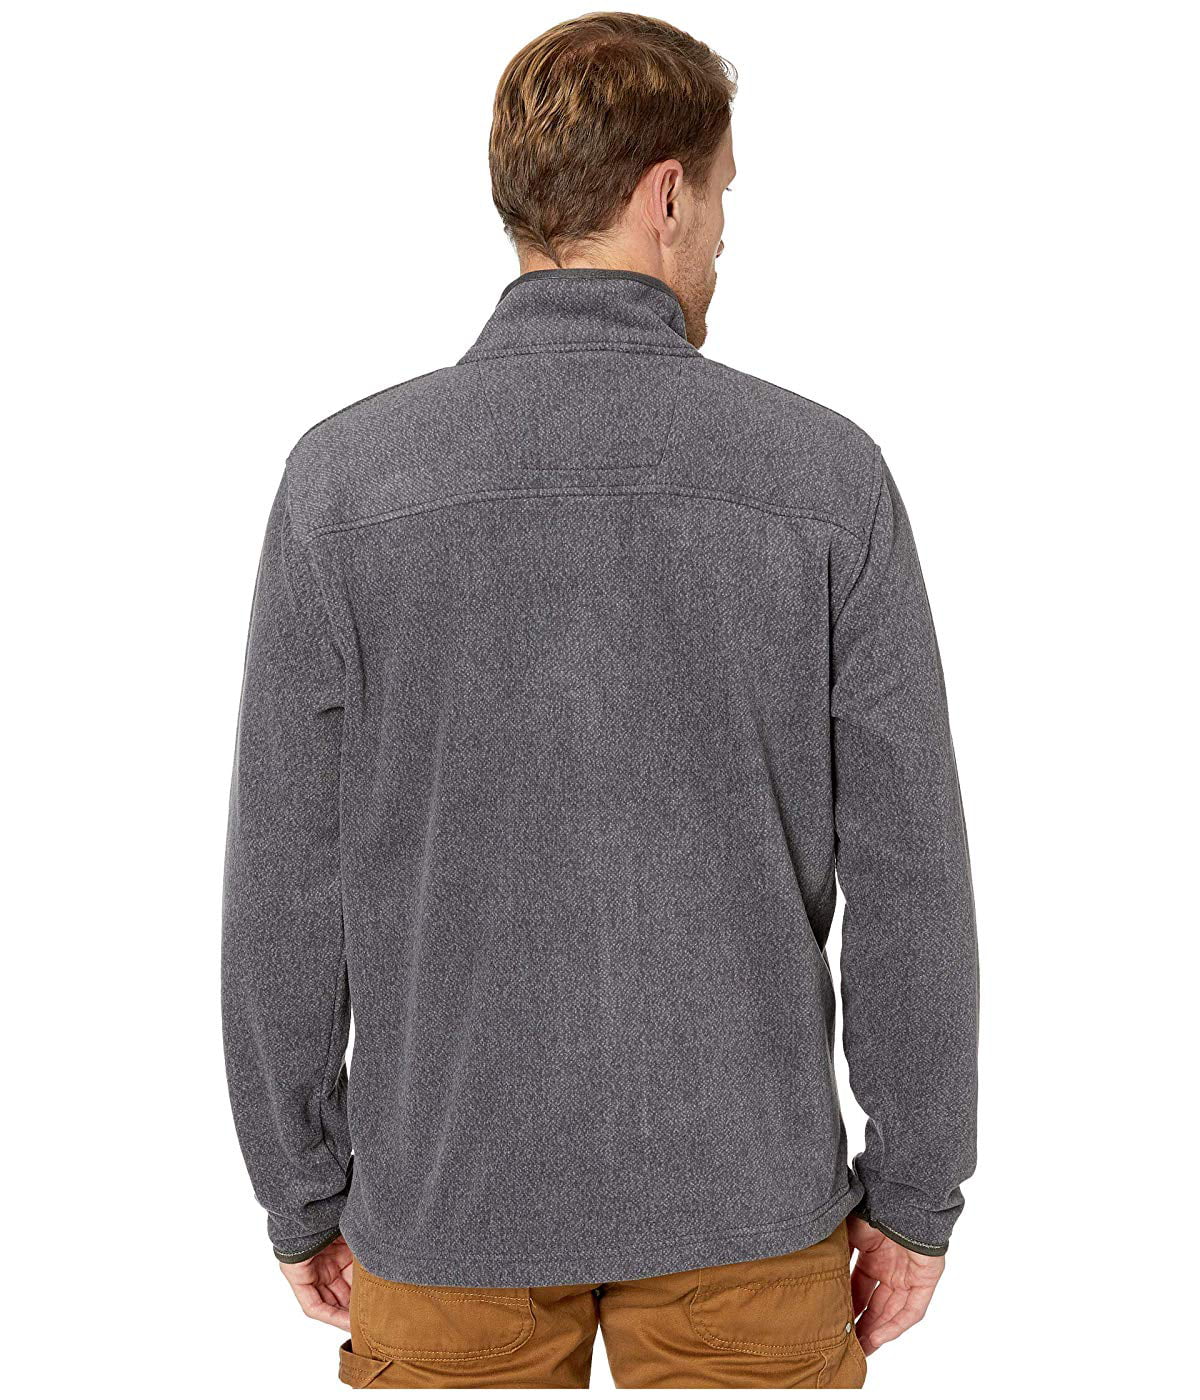 Carhartt - Carhartt Men's Dalton Full Zip Fleece Sweater - Walmart.com ...